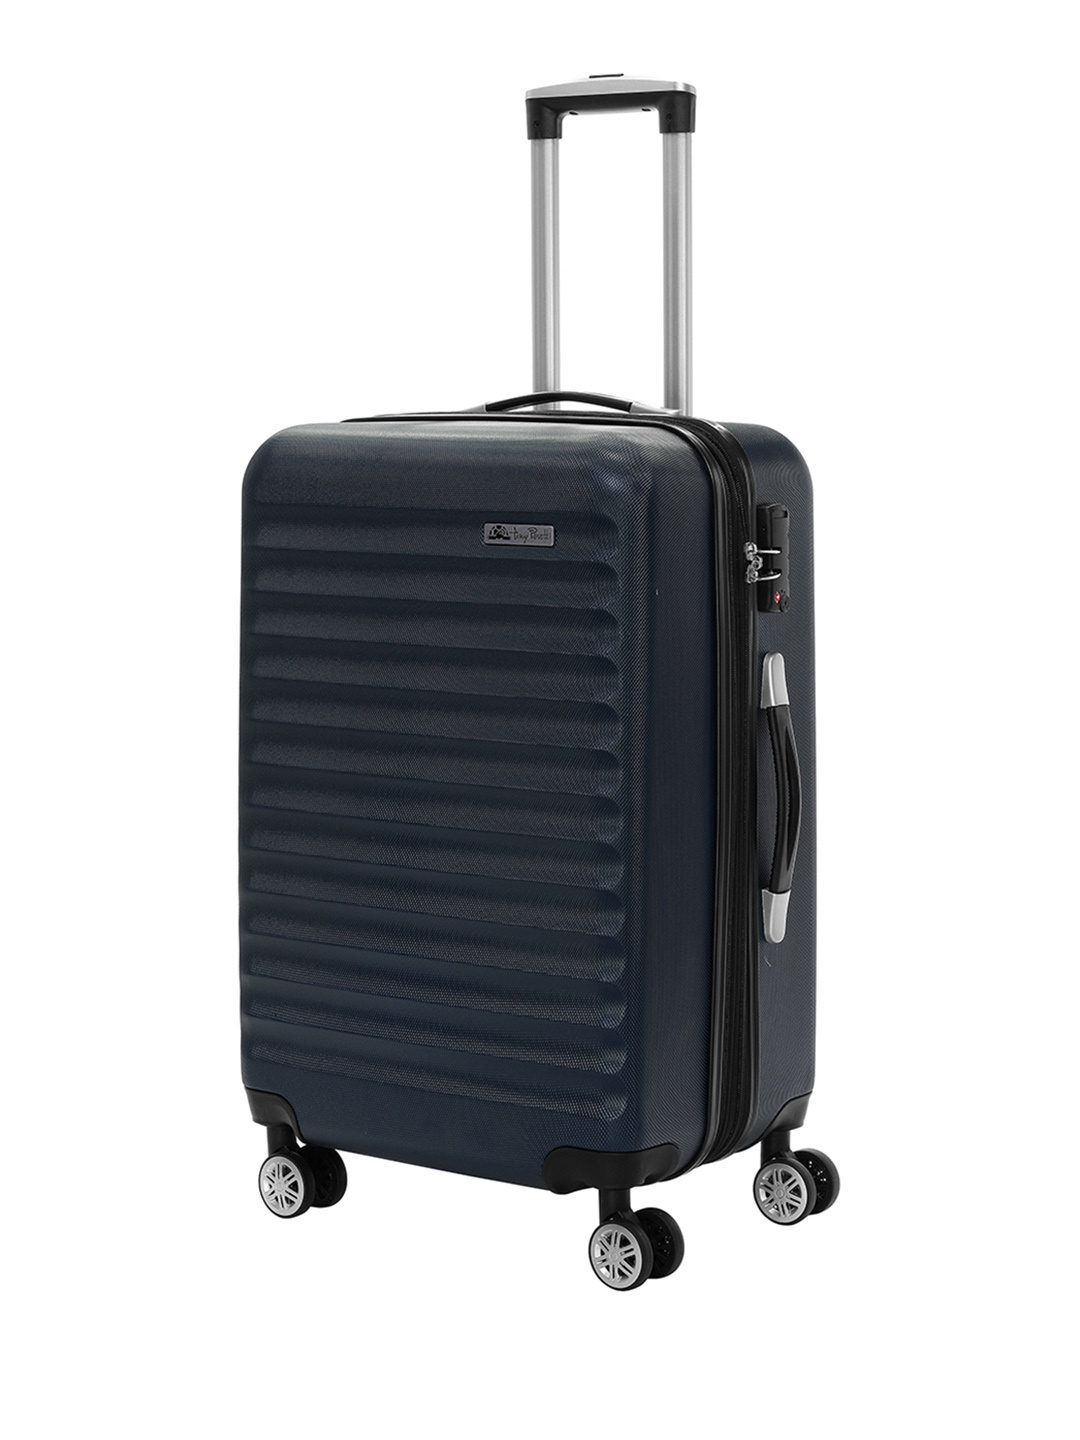 Фото Средний чемодан на колесах из ABS пластика темно-синего цвета Чемоданы